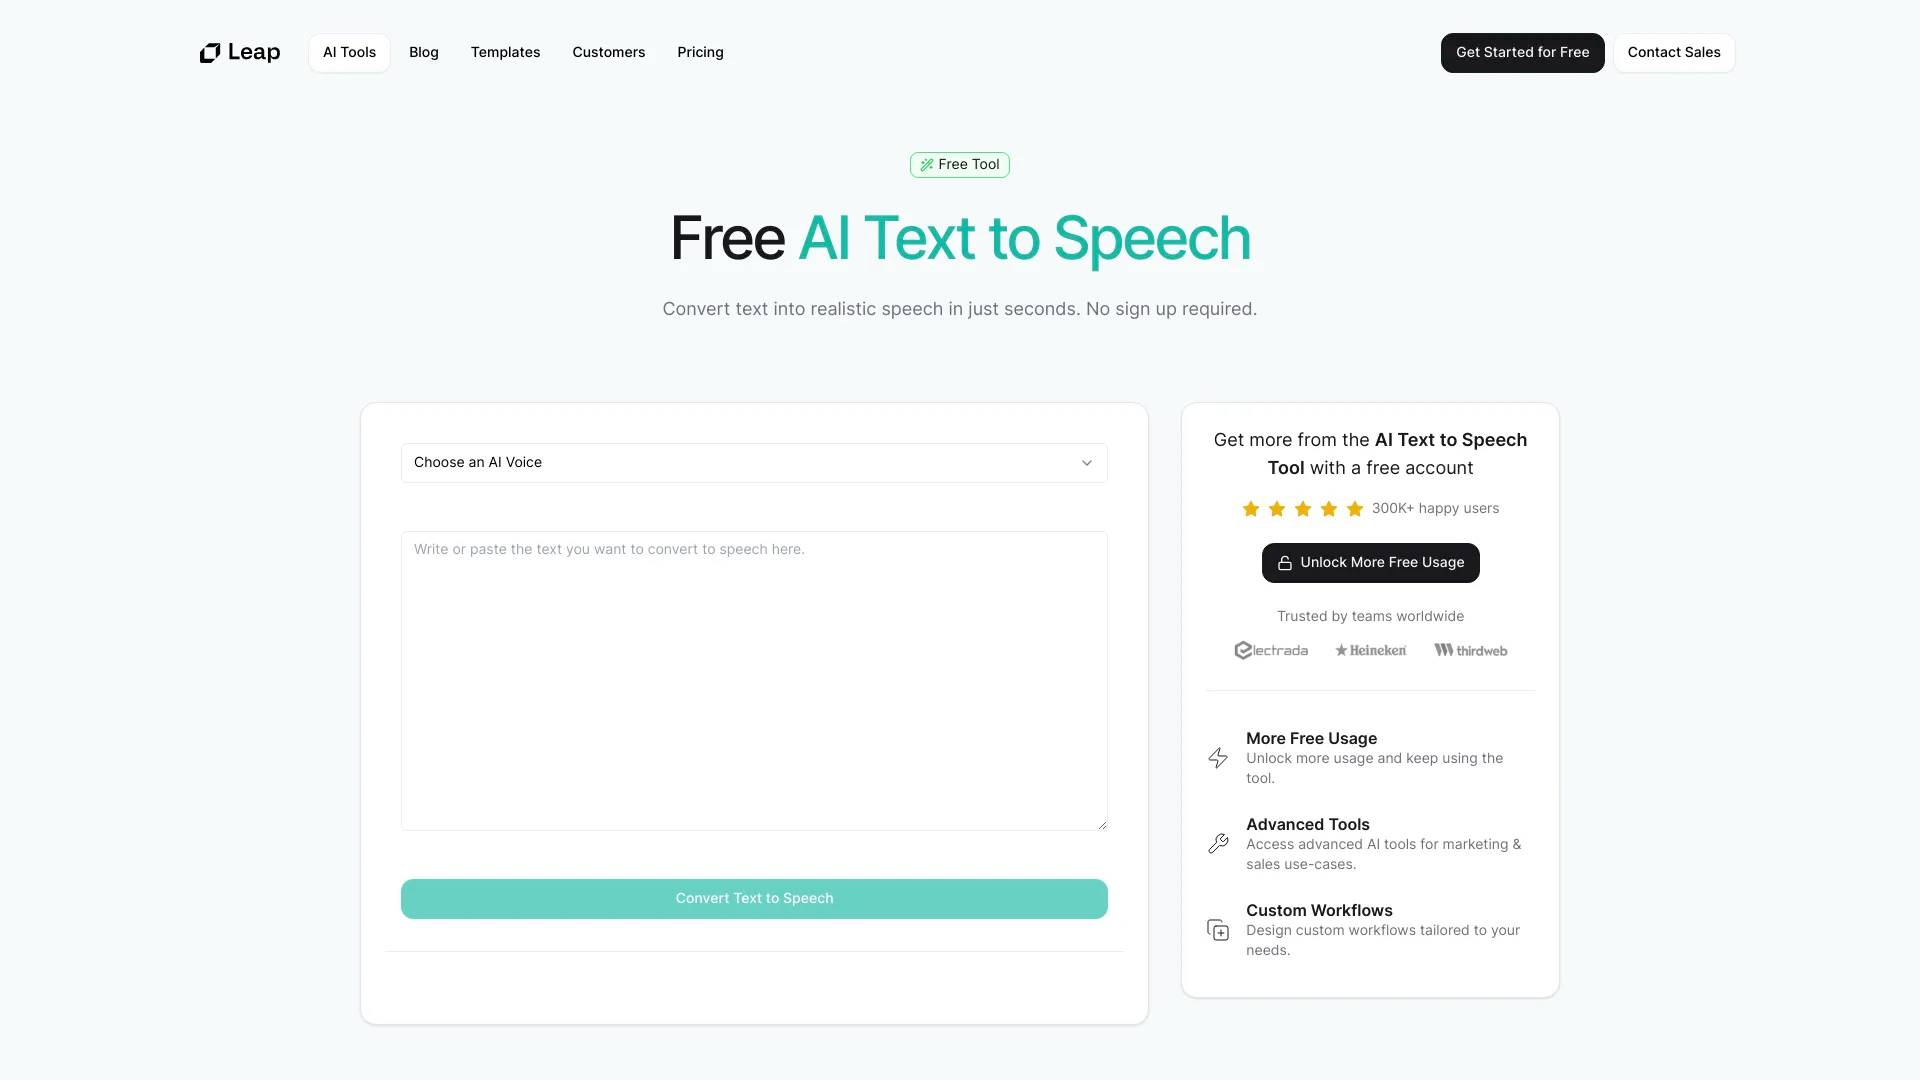 Free AI Text to Speech by Leap AI screenshot